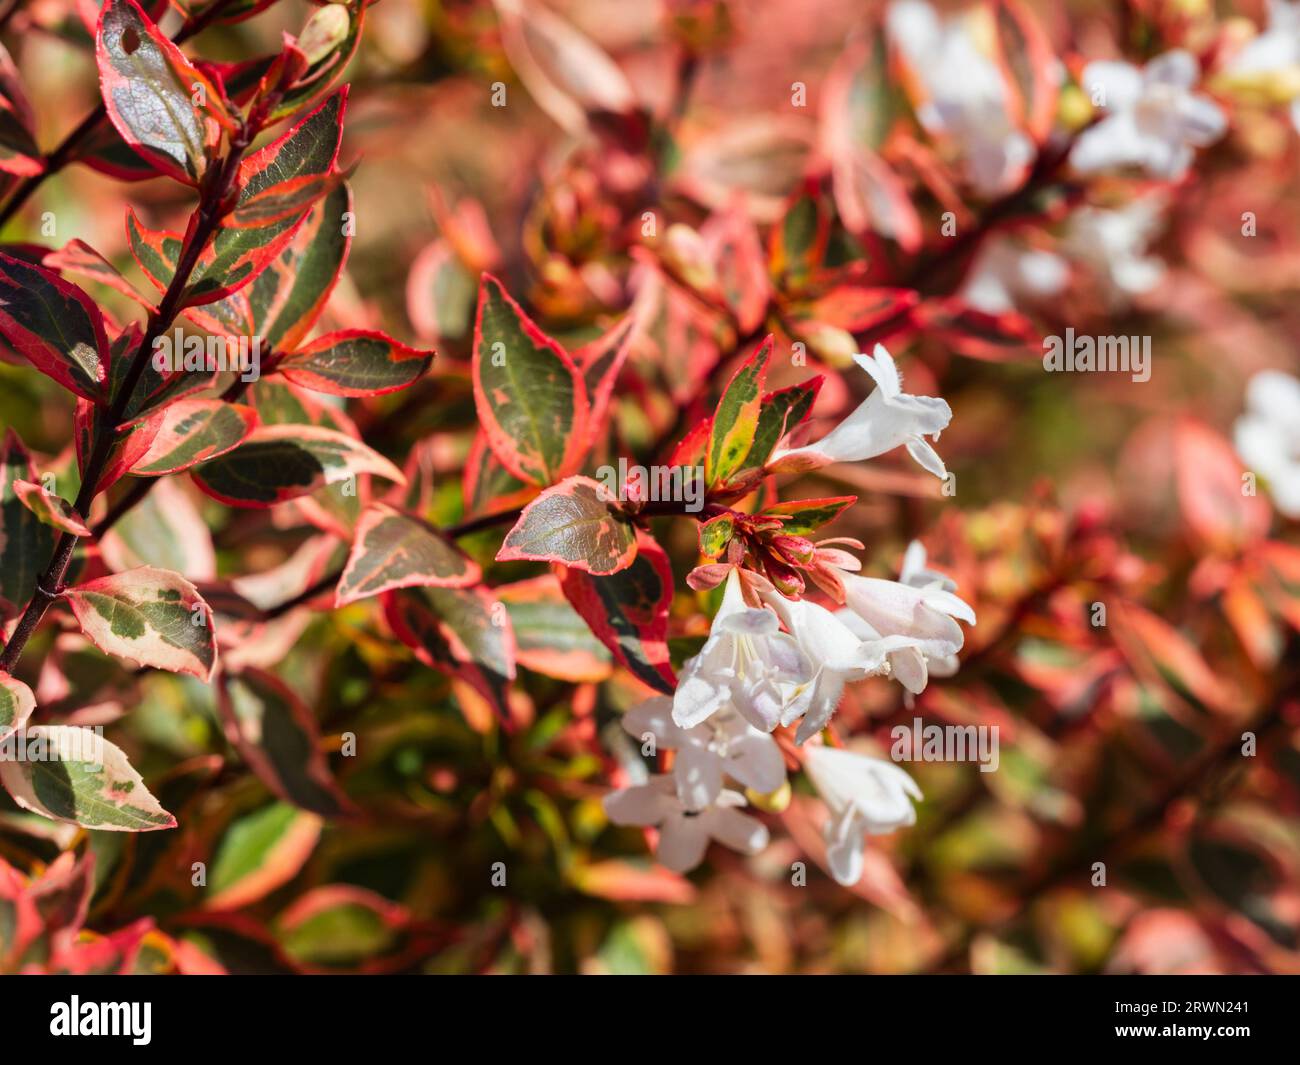 White flowers and variegated foliage of the hardy evergreen, late summer to autumn flowering shrub, Abelia x grandiflora 'Kaleidoscope' Stock Photo